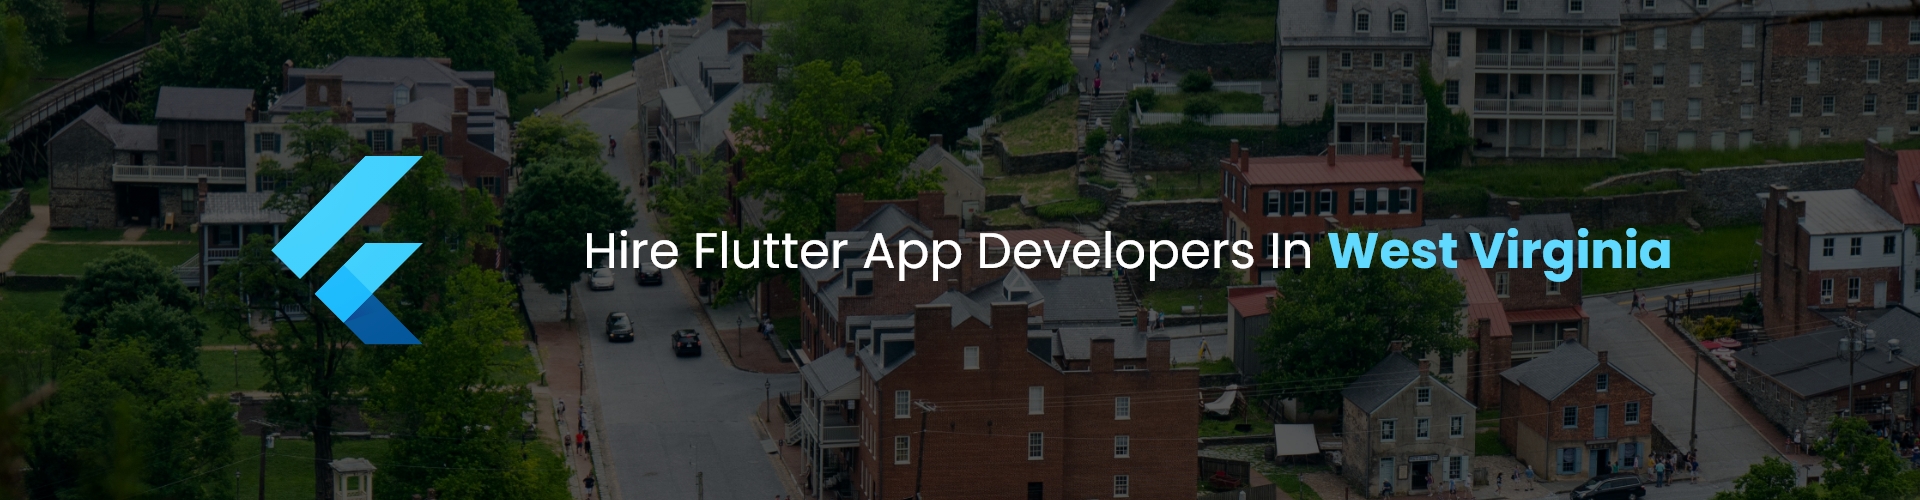 hire flutter app developers in west virginia